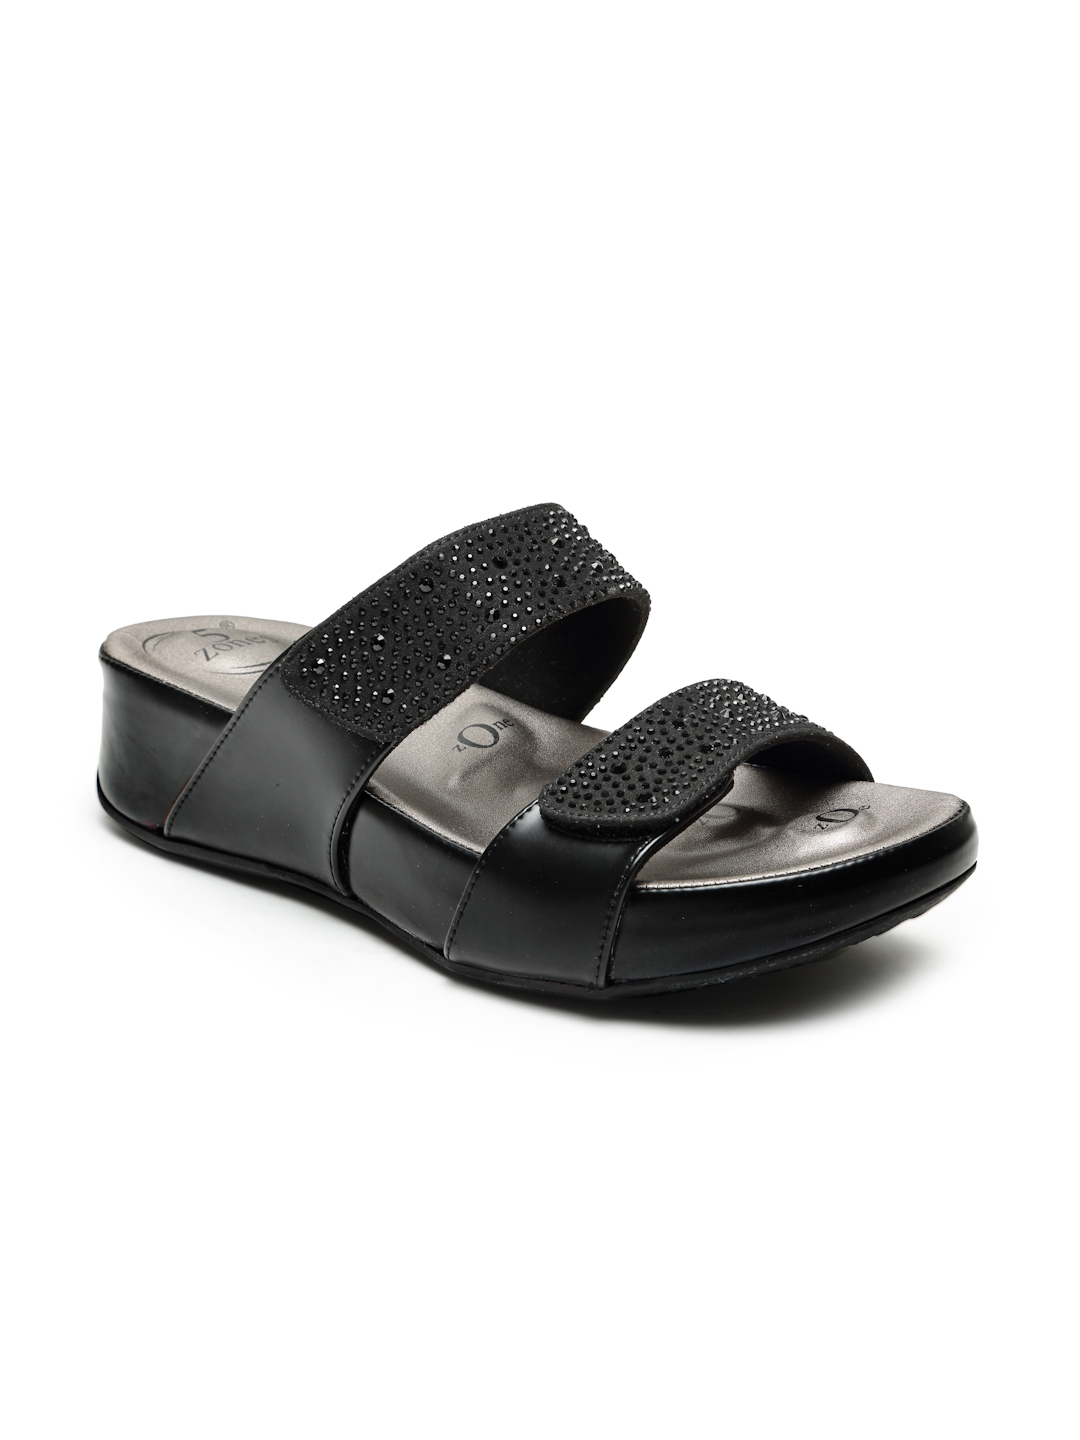 Buy Von Wellx Germany Comfort Women's Black Casual Sandals Paula Online in Dubai